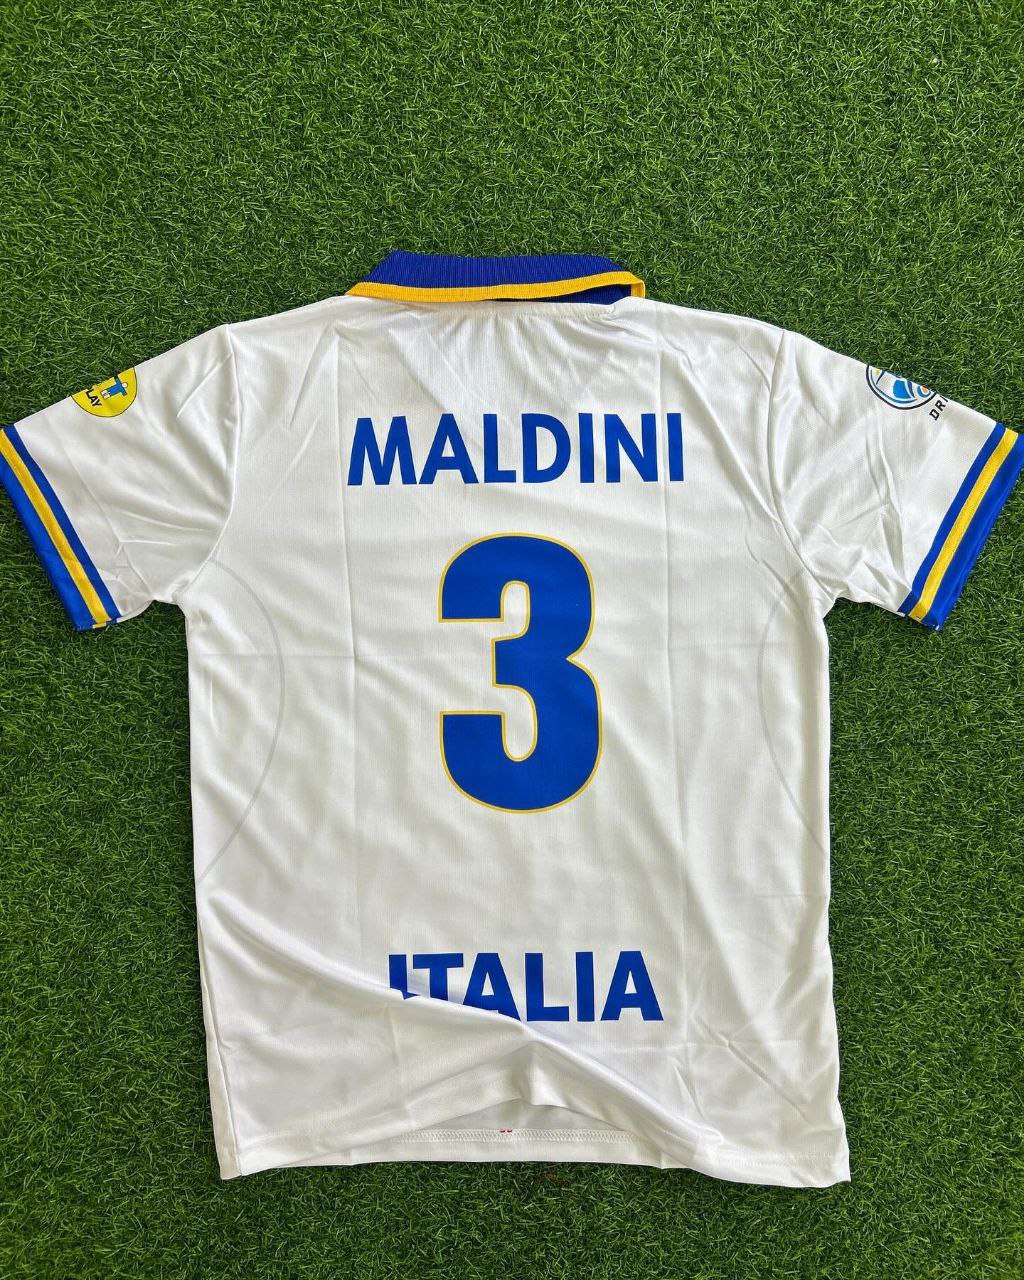 Paolo Maldini Italien Weißes Retro-Trikot